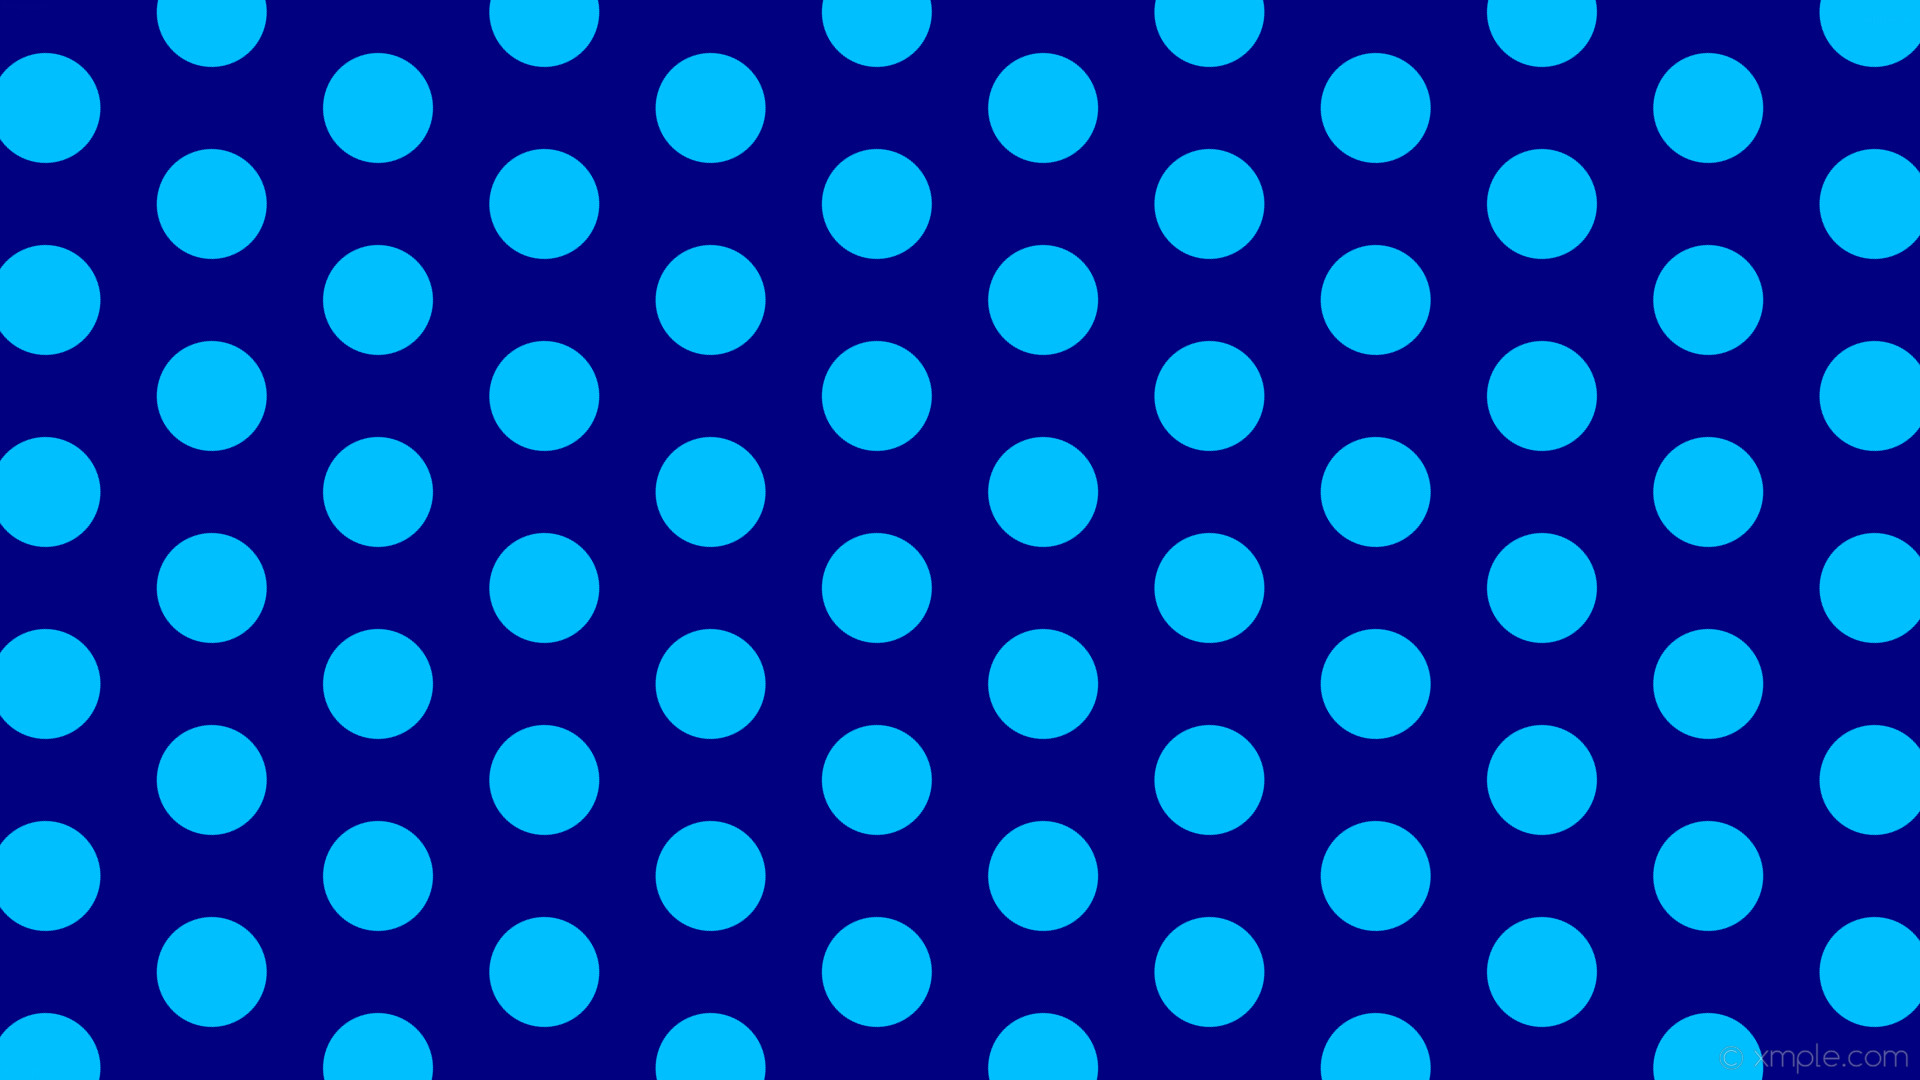 1920x1080 wallpaper hexagon blue polka dots navy deep sky blue #000080 #00bfff  diagonal 30Â°